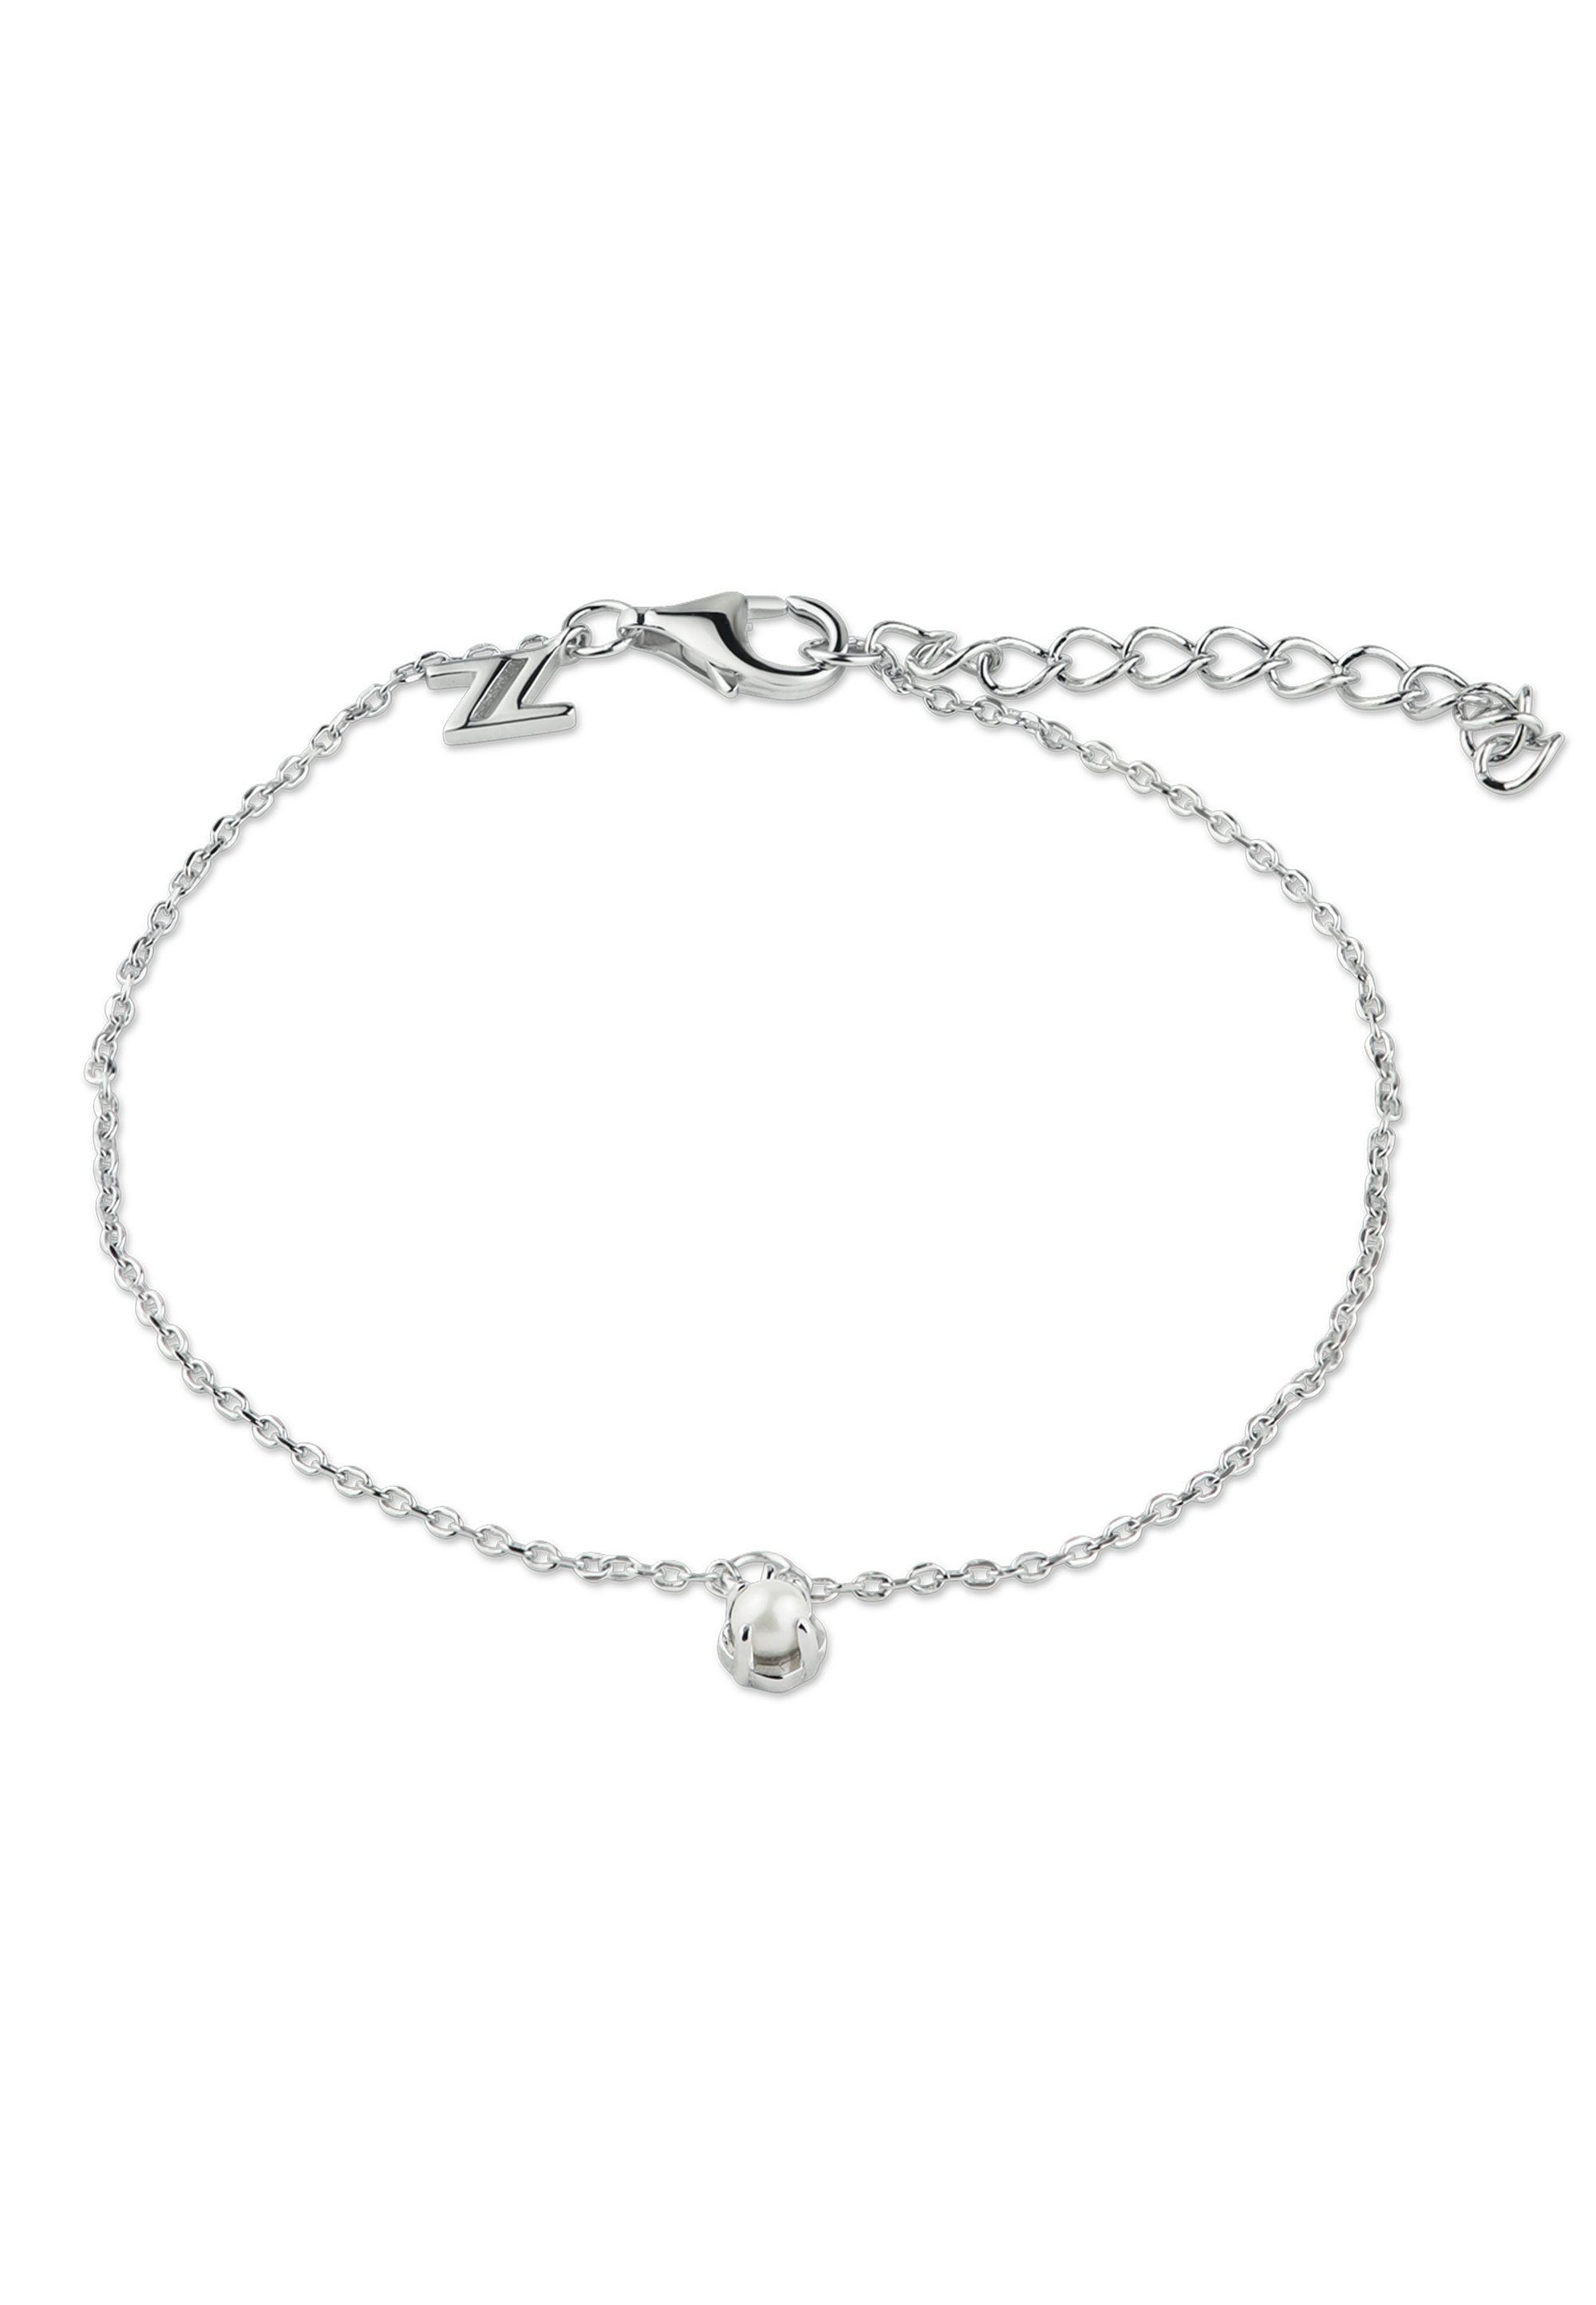 NANA KAY Armband Petite Pearls, ST1891, mit weißer Süßwasserperle